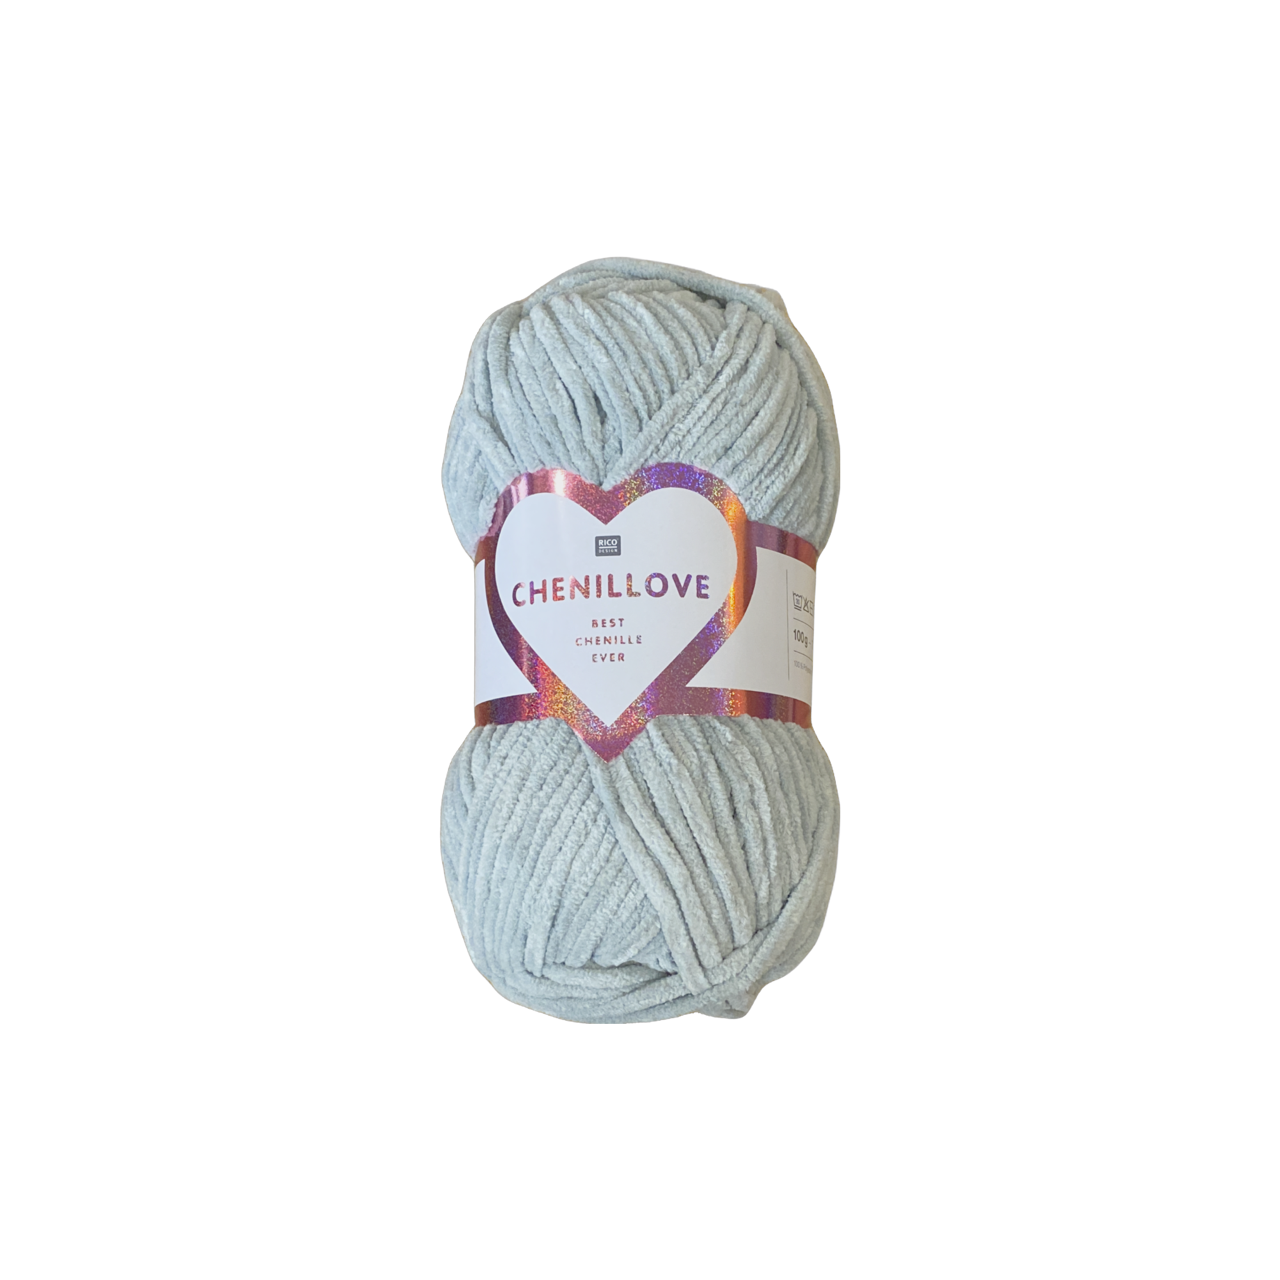 RICO Chenillove Mint (009) chenille yarn - 100g